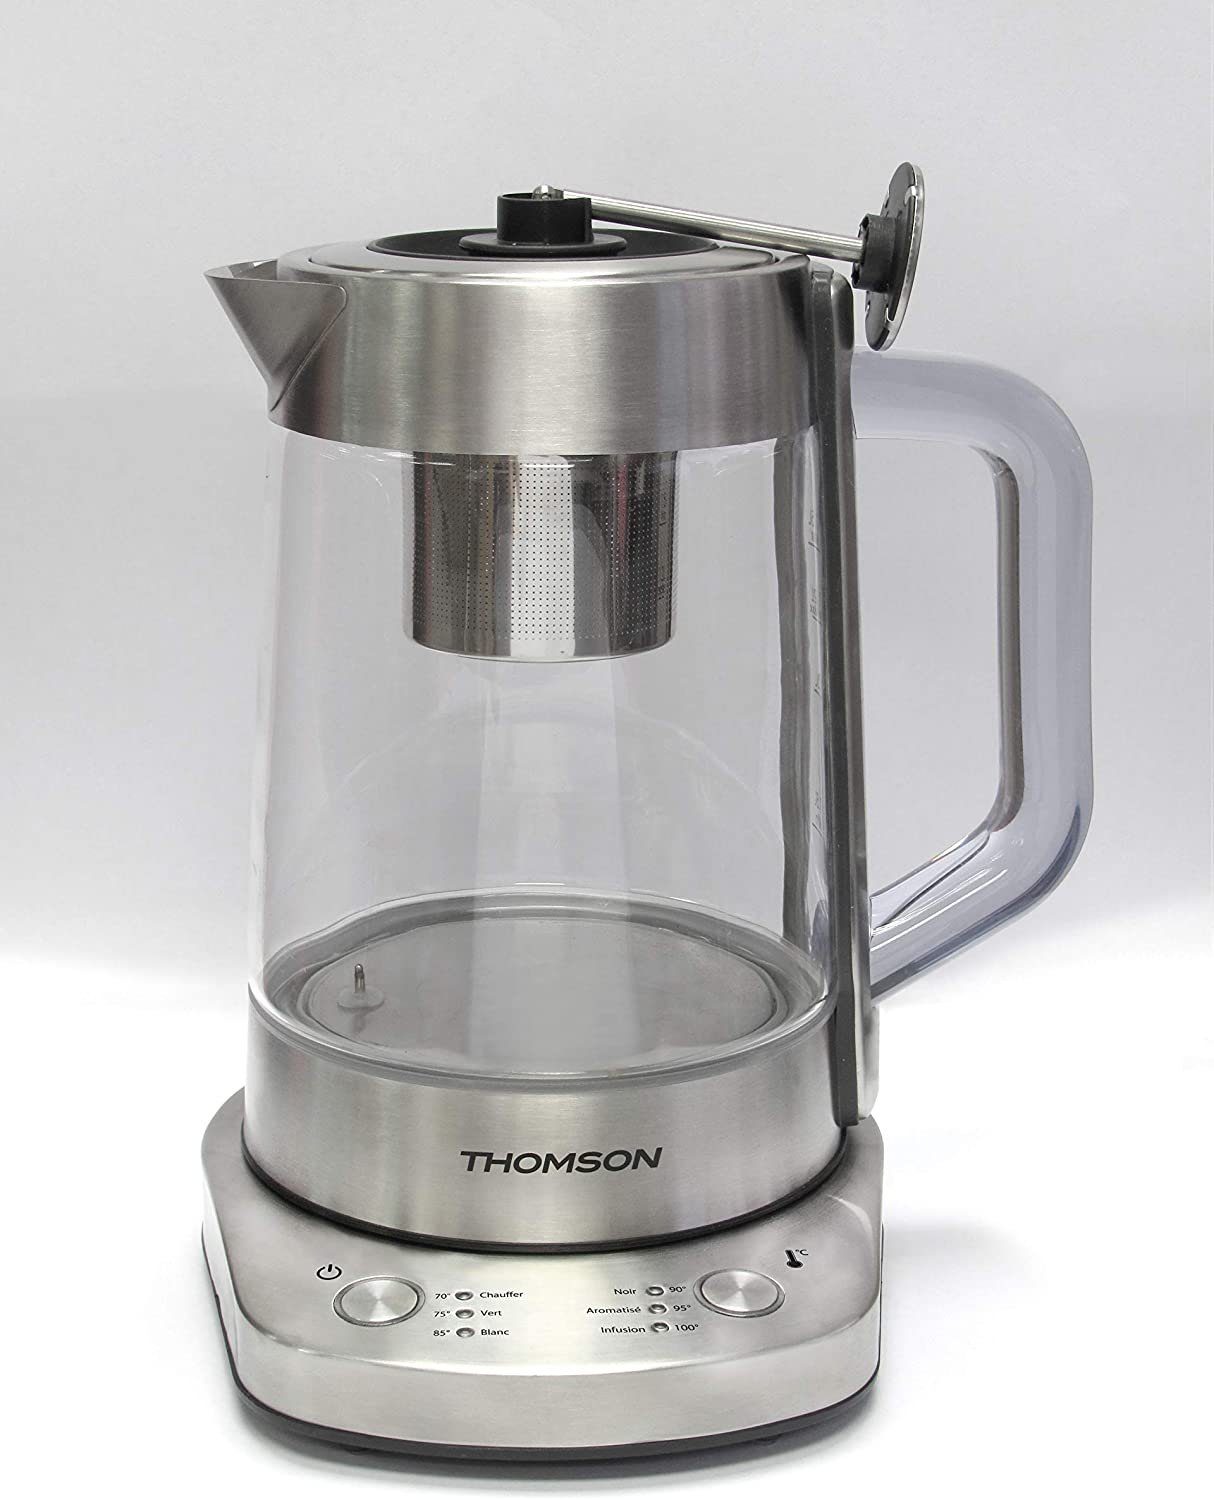 Kompakt-Küchenmaschine - W (1,2 THOMSON Teebereiter, Liter) elektrisch elektrischer 2000 Thomson Teekocher